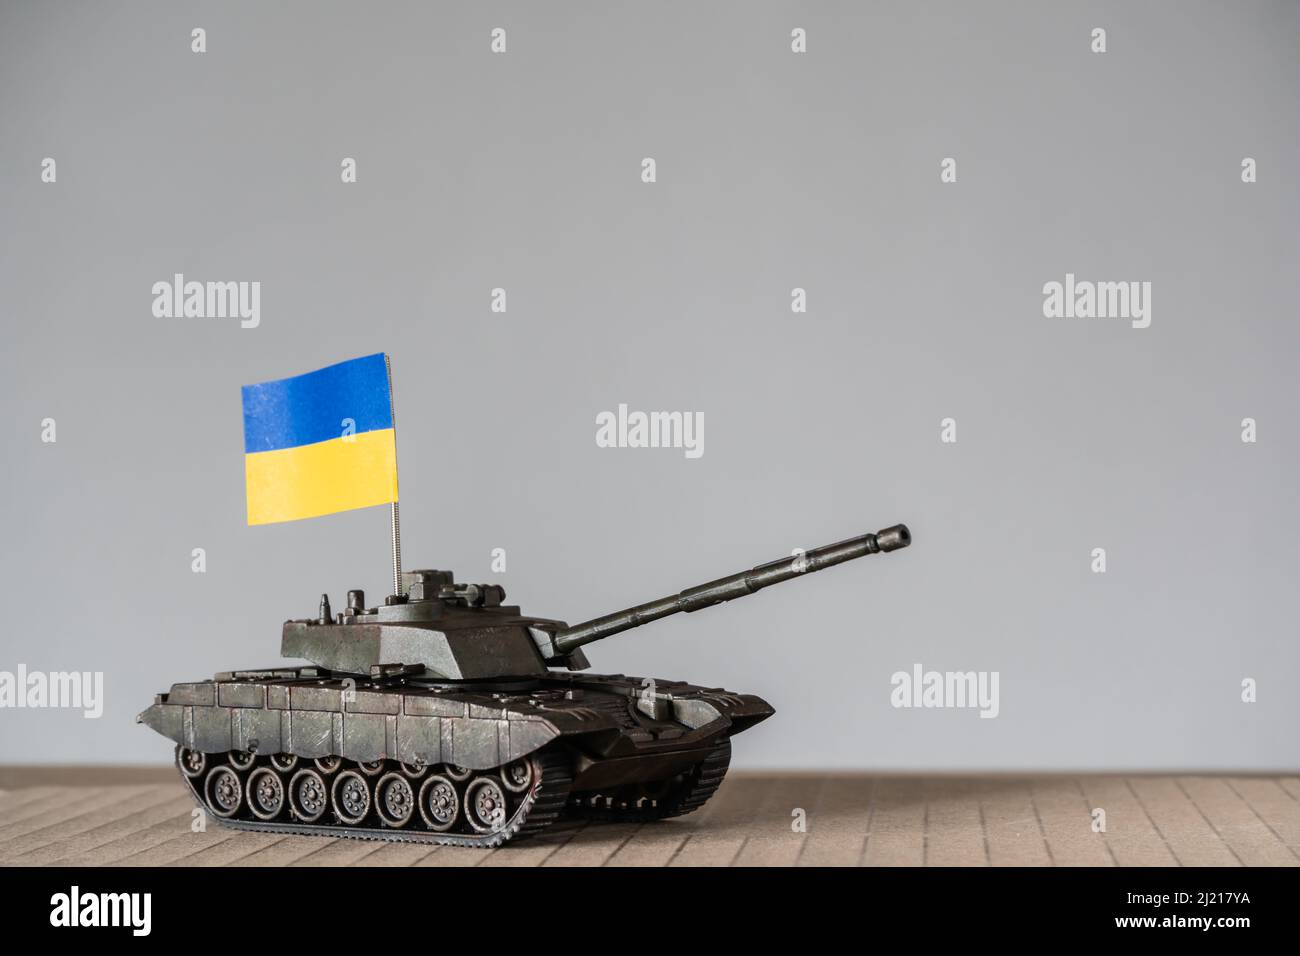 Toy tanks with Ukrainian flags Stock Photo